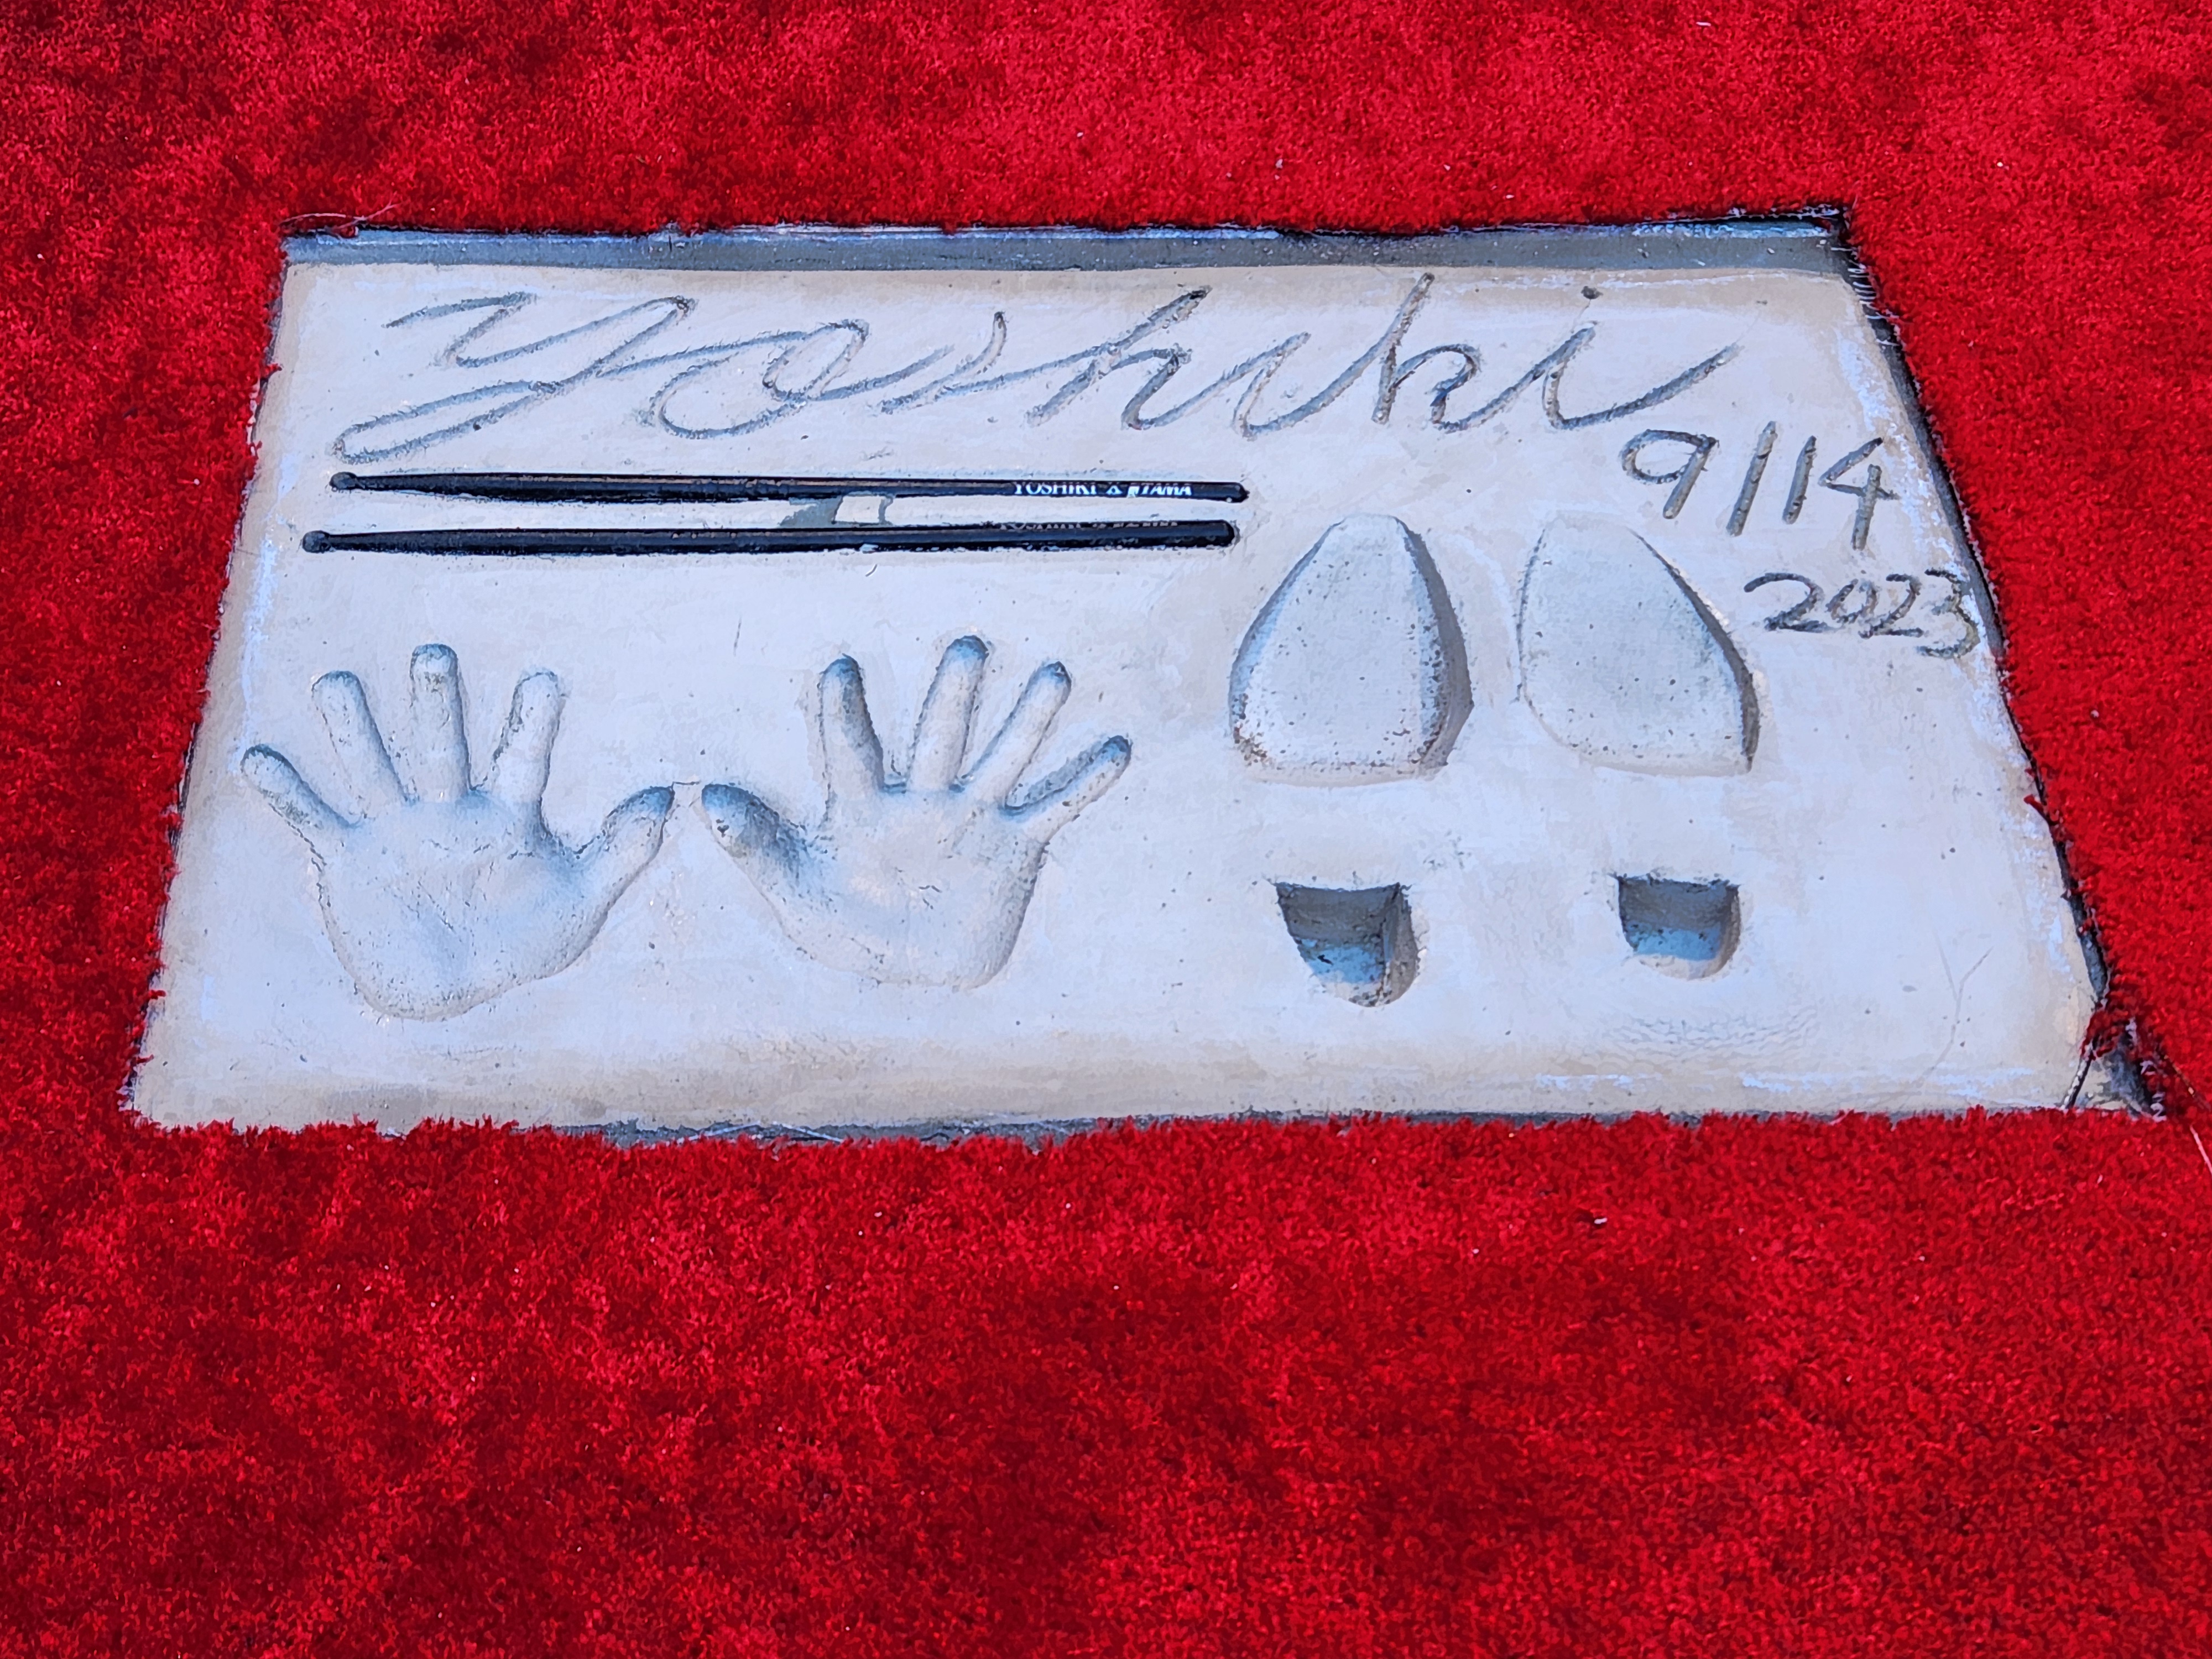 YOSHIKI's hand and foot print